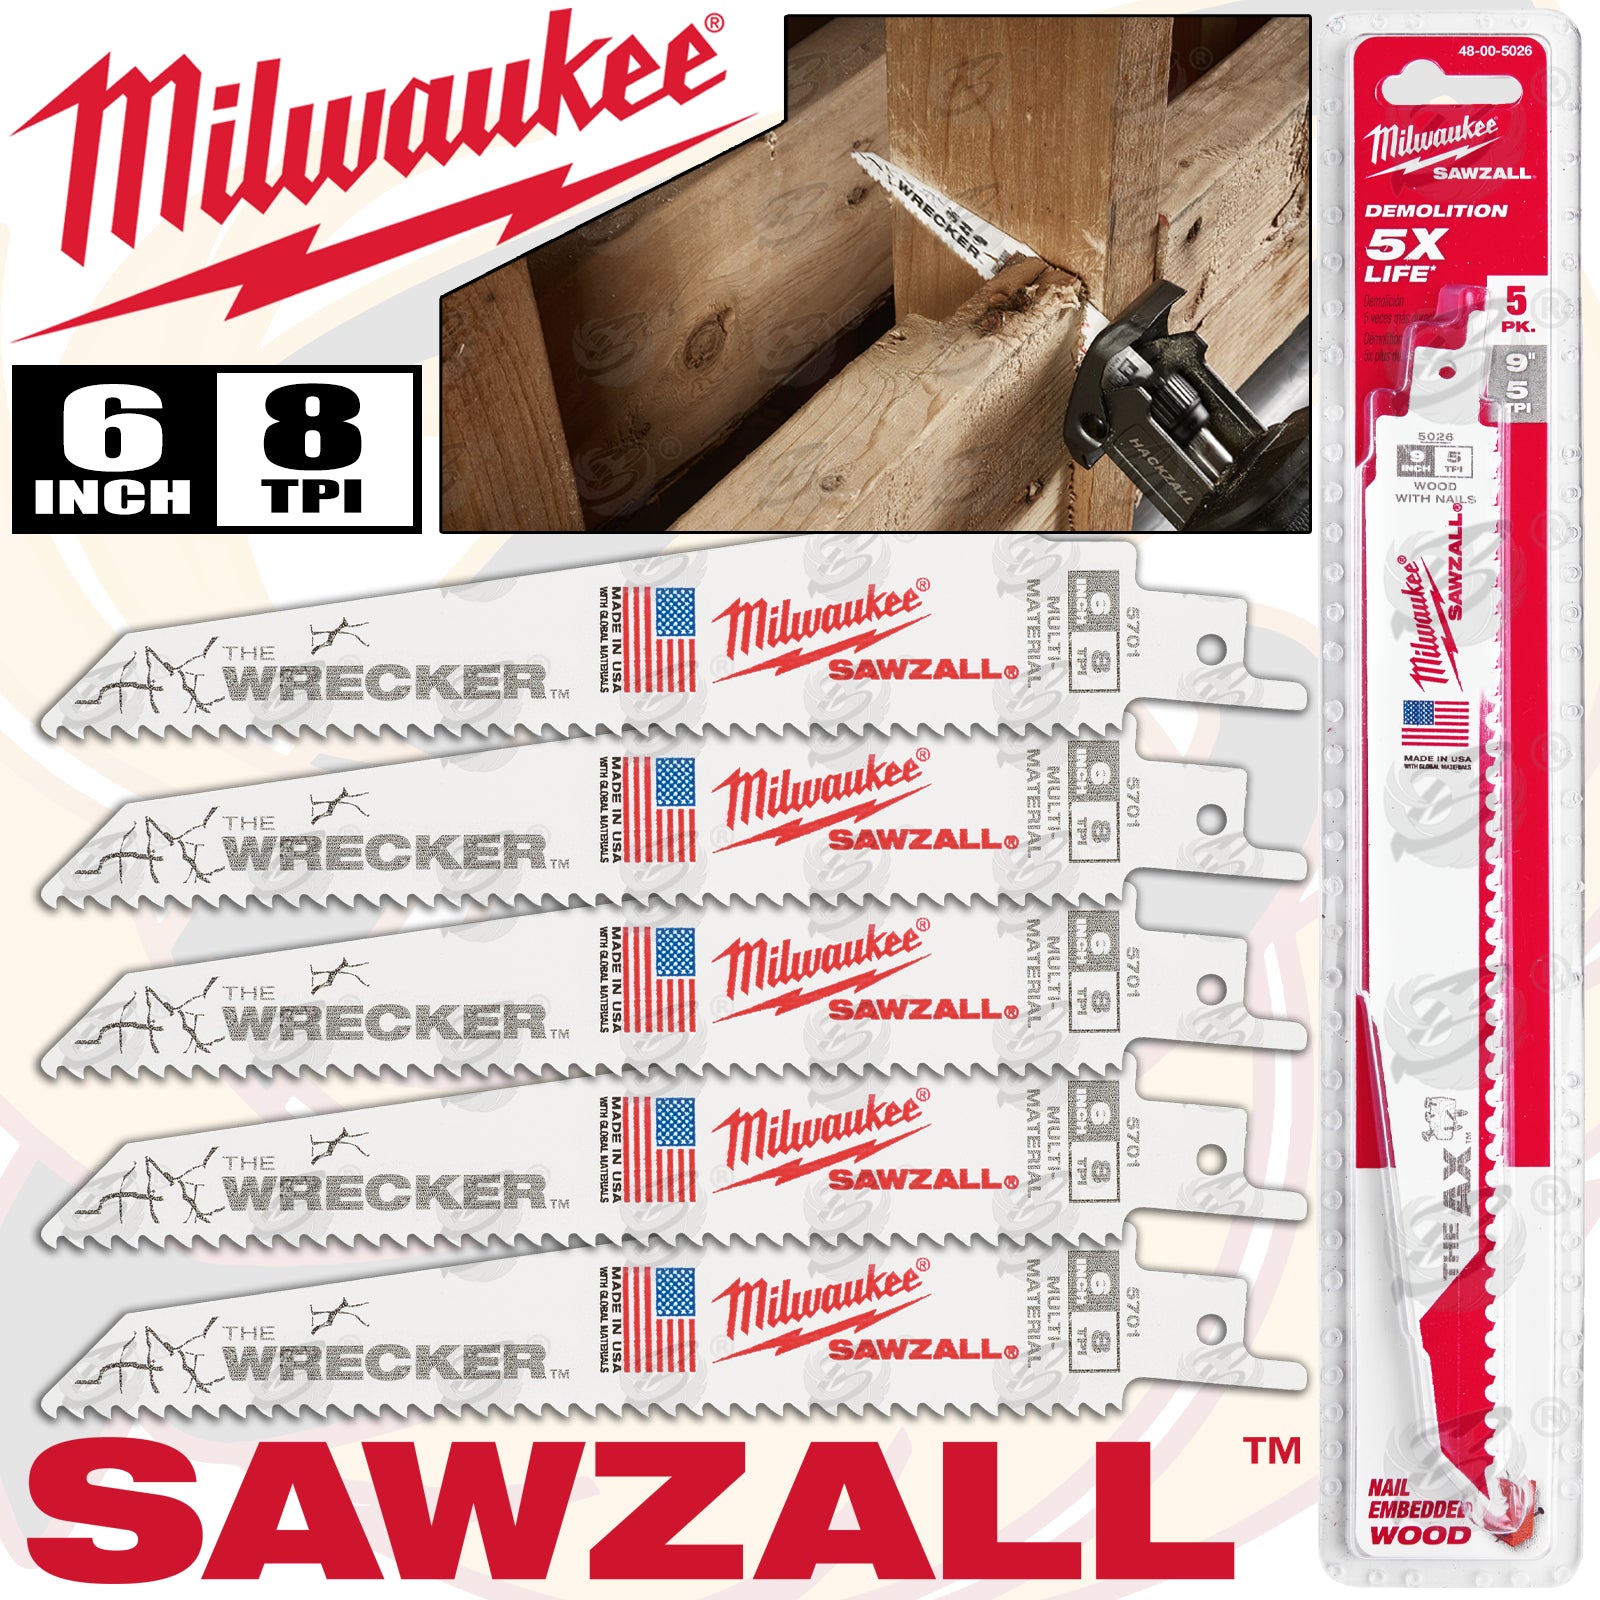 MILWAUKEE SAWZALL RECIPROCATING SAW BLADE 150mm x 8TPI MULTI MATERIAL SAW BLADES ( THE WRECKER ) ( x 5 )